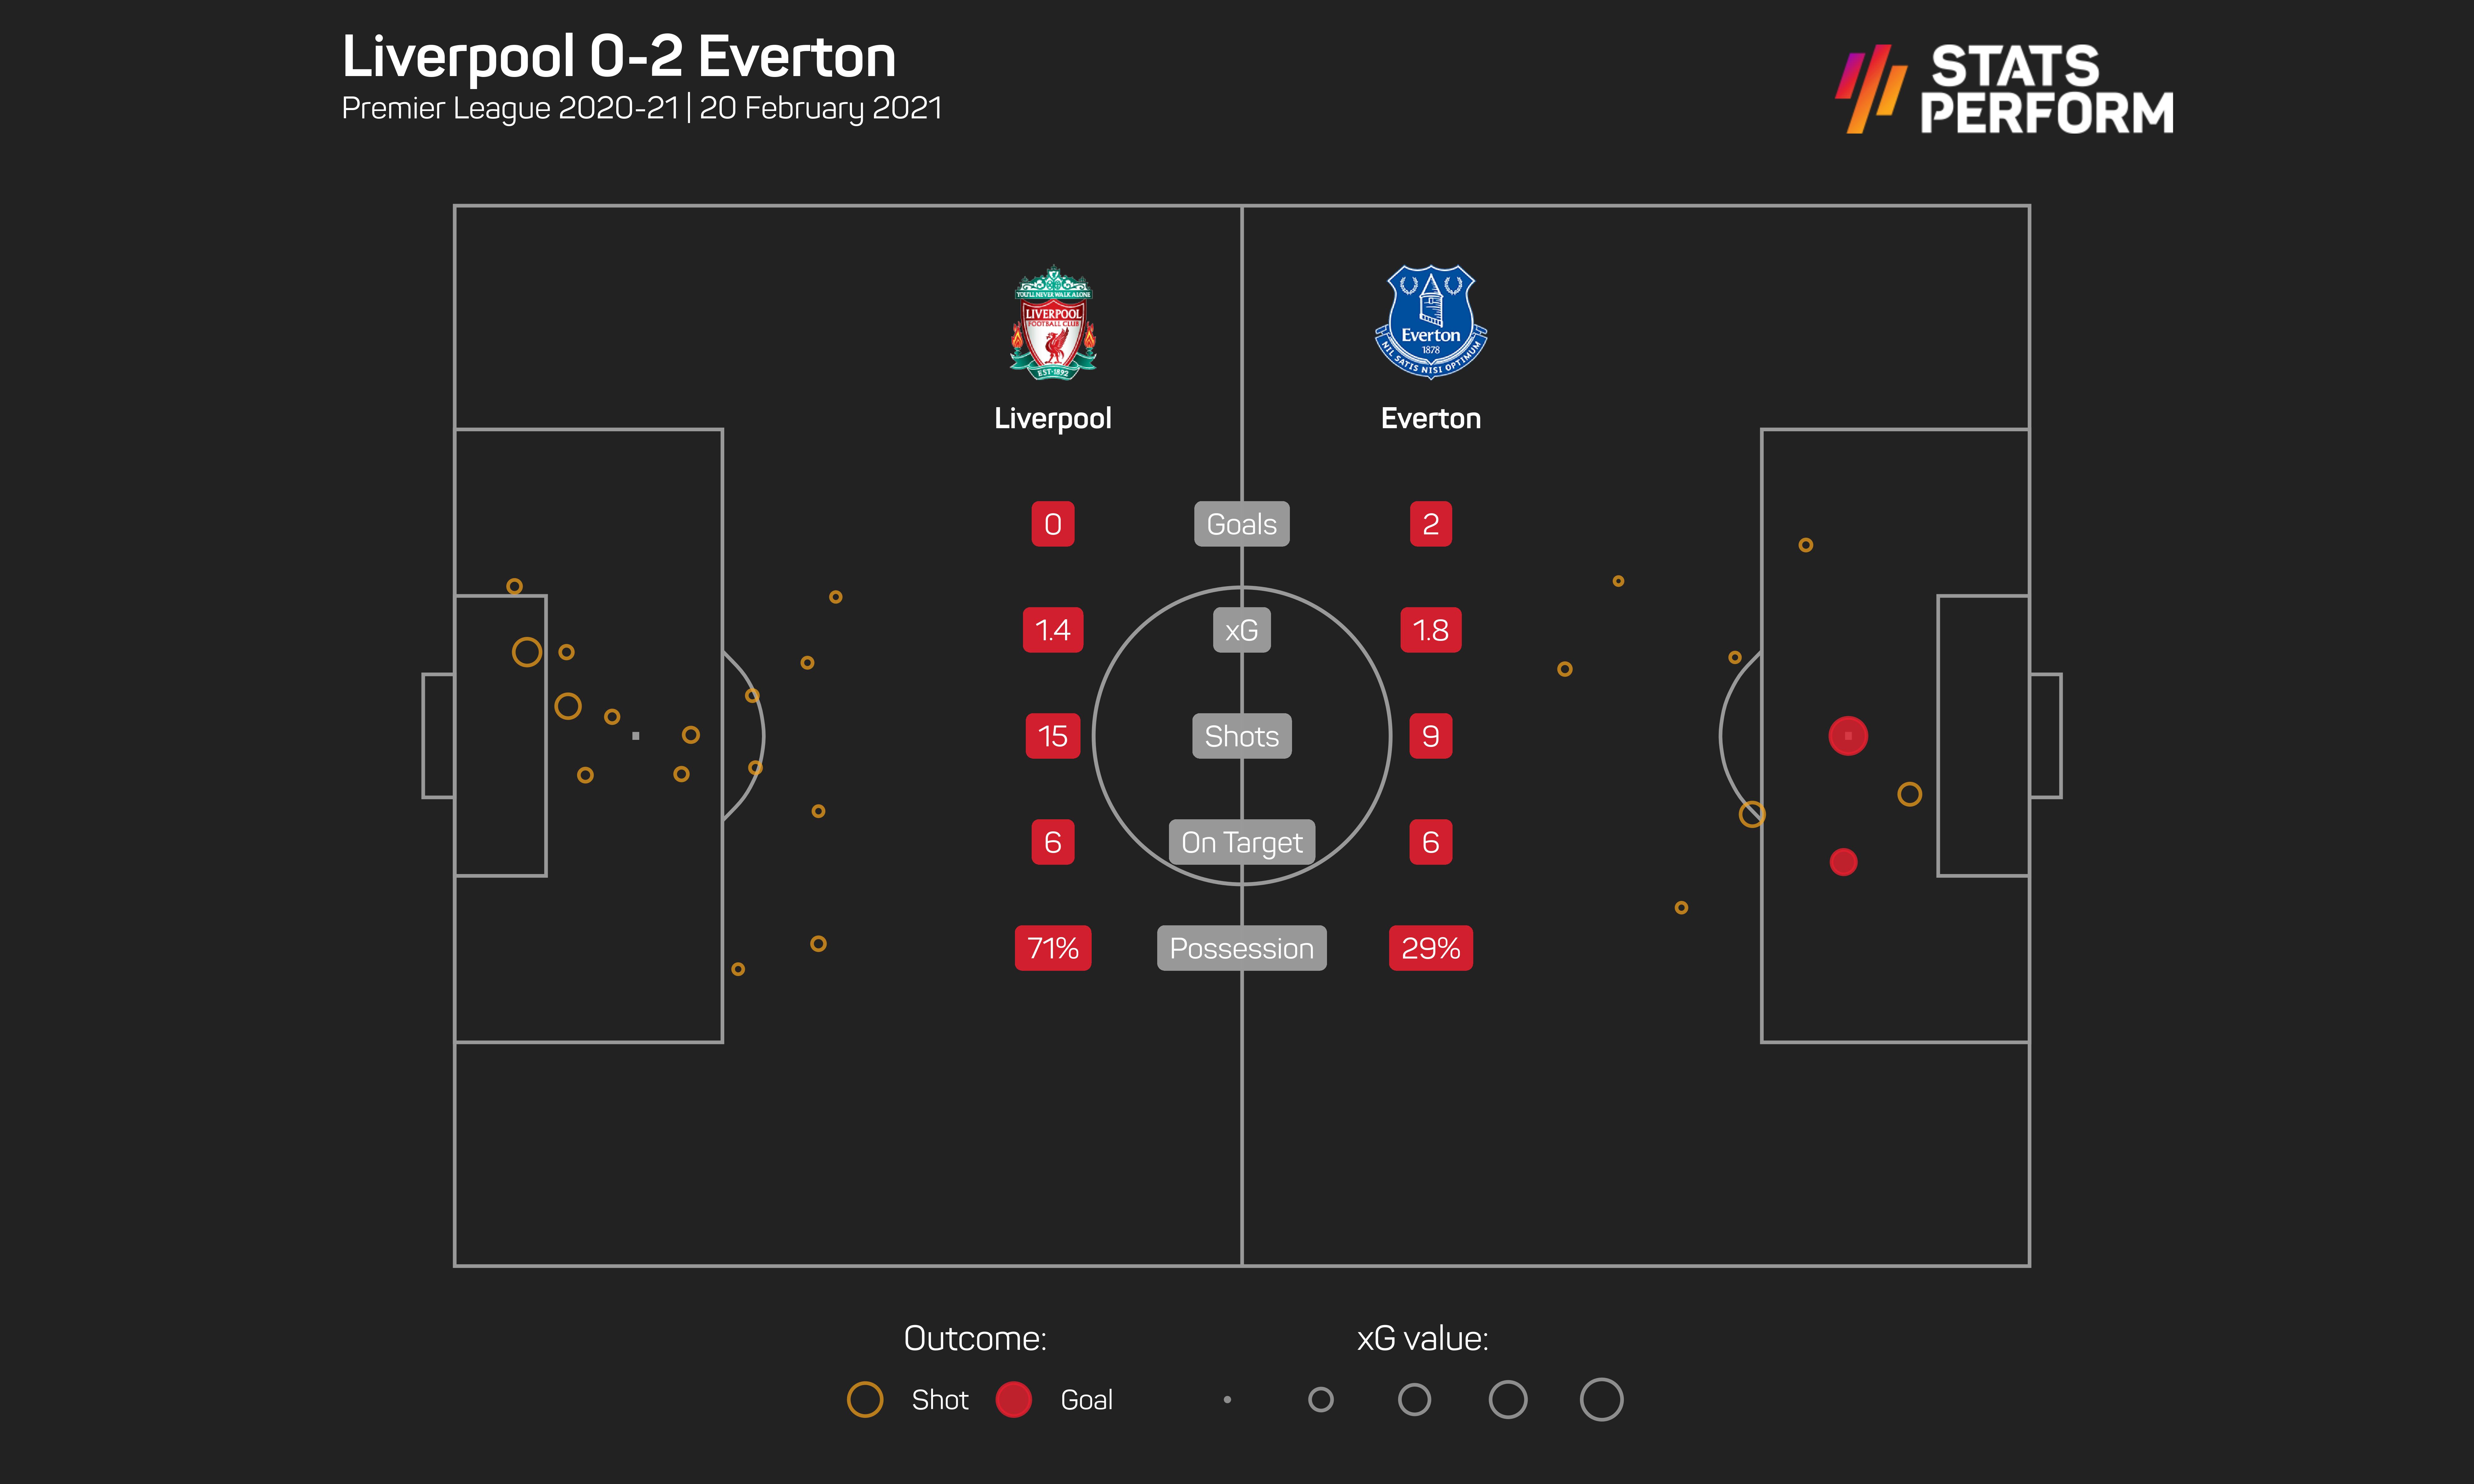 Everton's resolute display saw them break their Anfield hoodoo